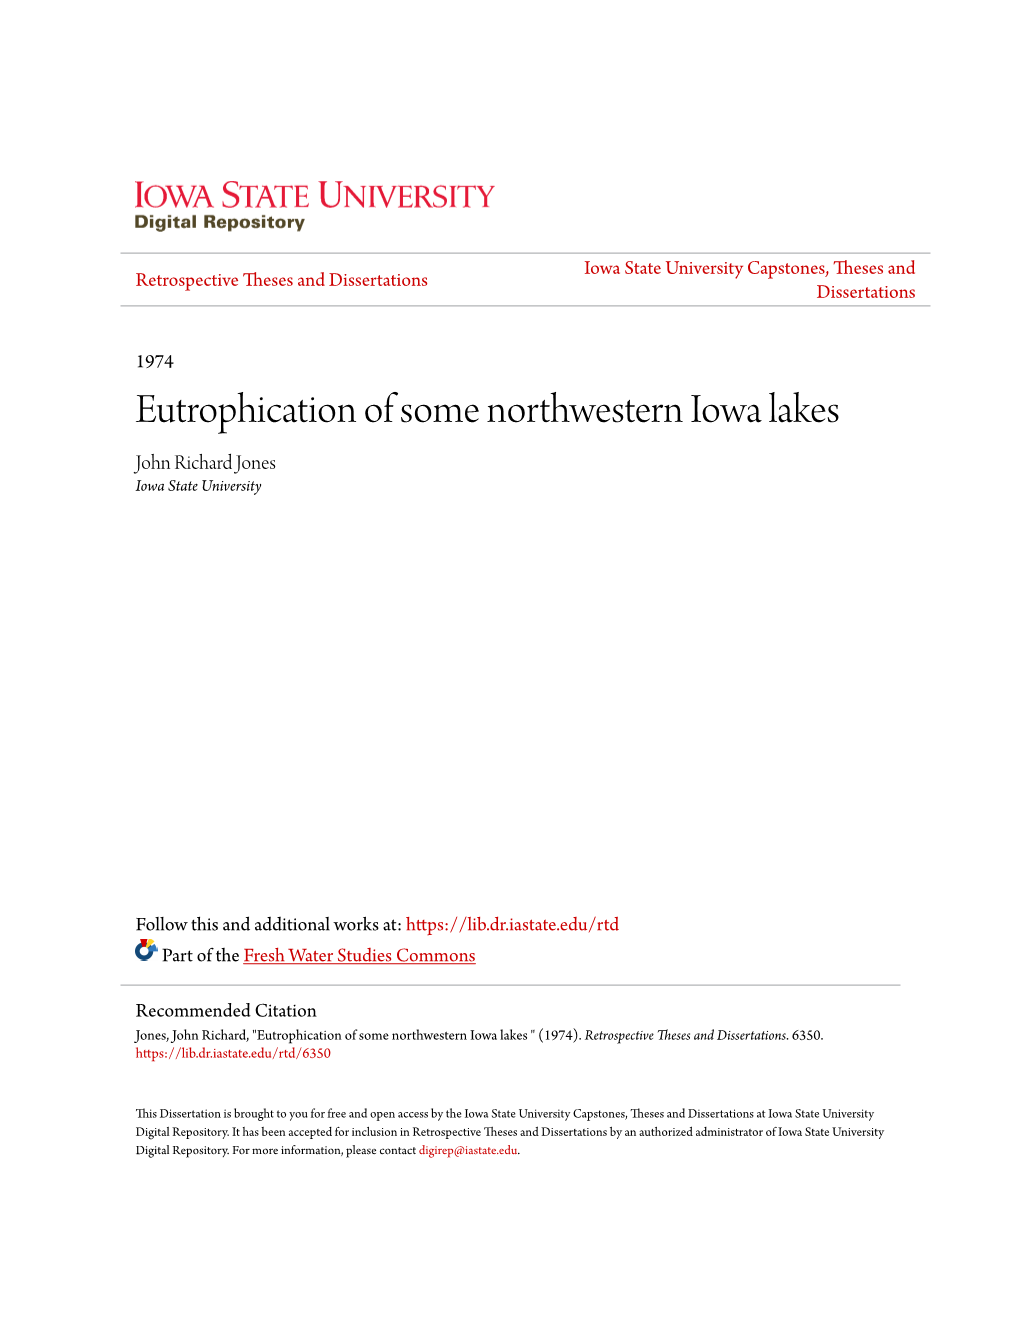 Eutrophication of Some Northwestern Iowa Lakes John Richard Jones Iowa State University